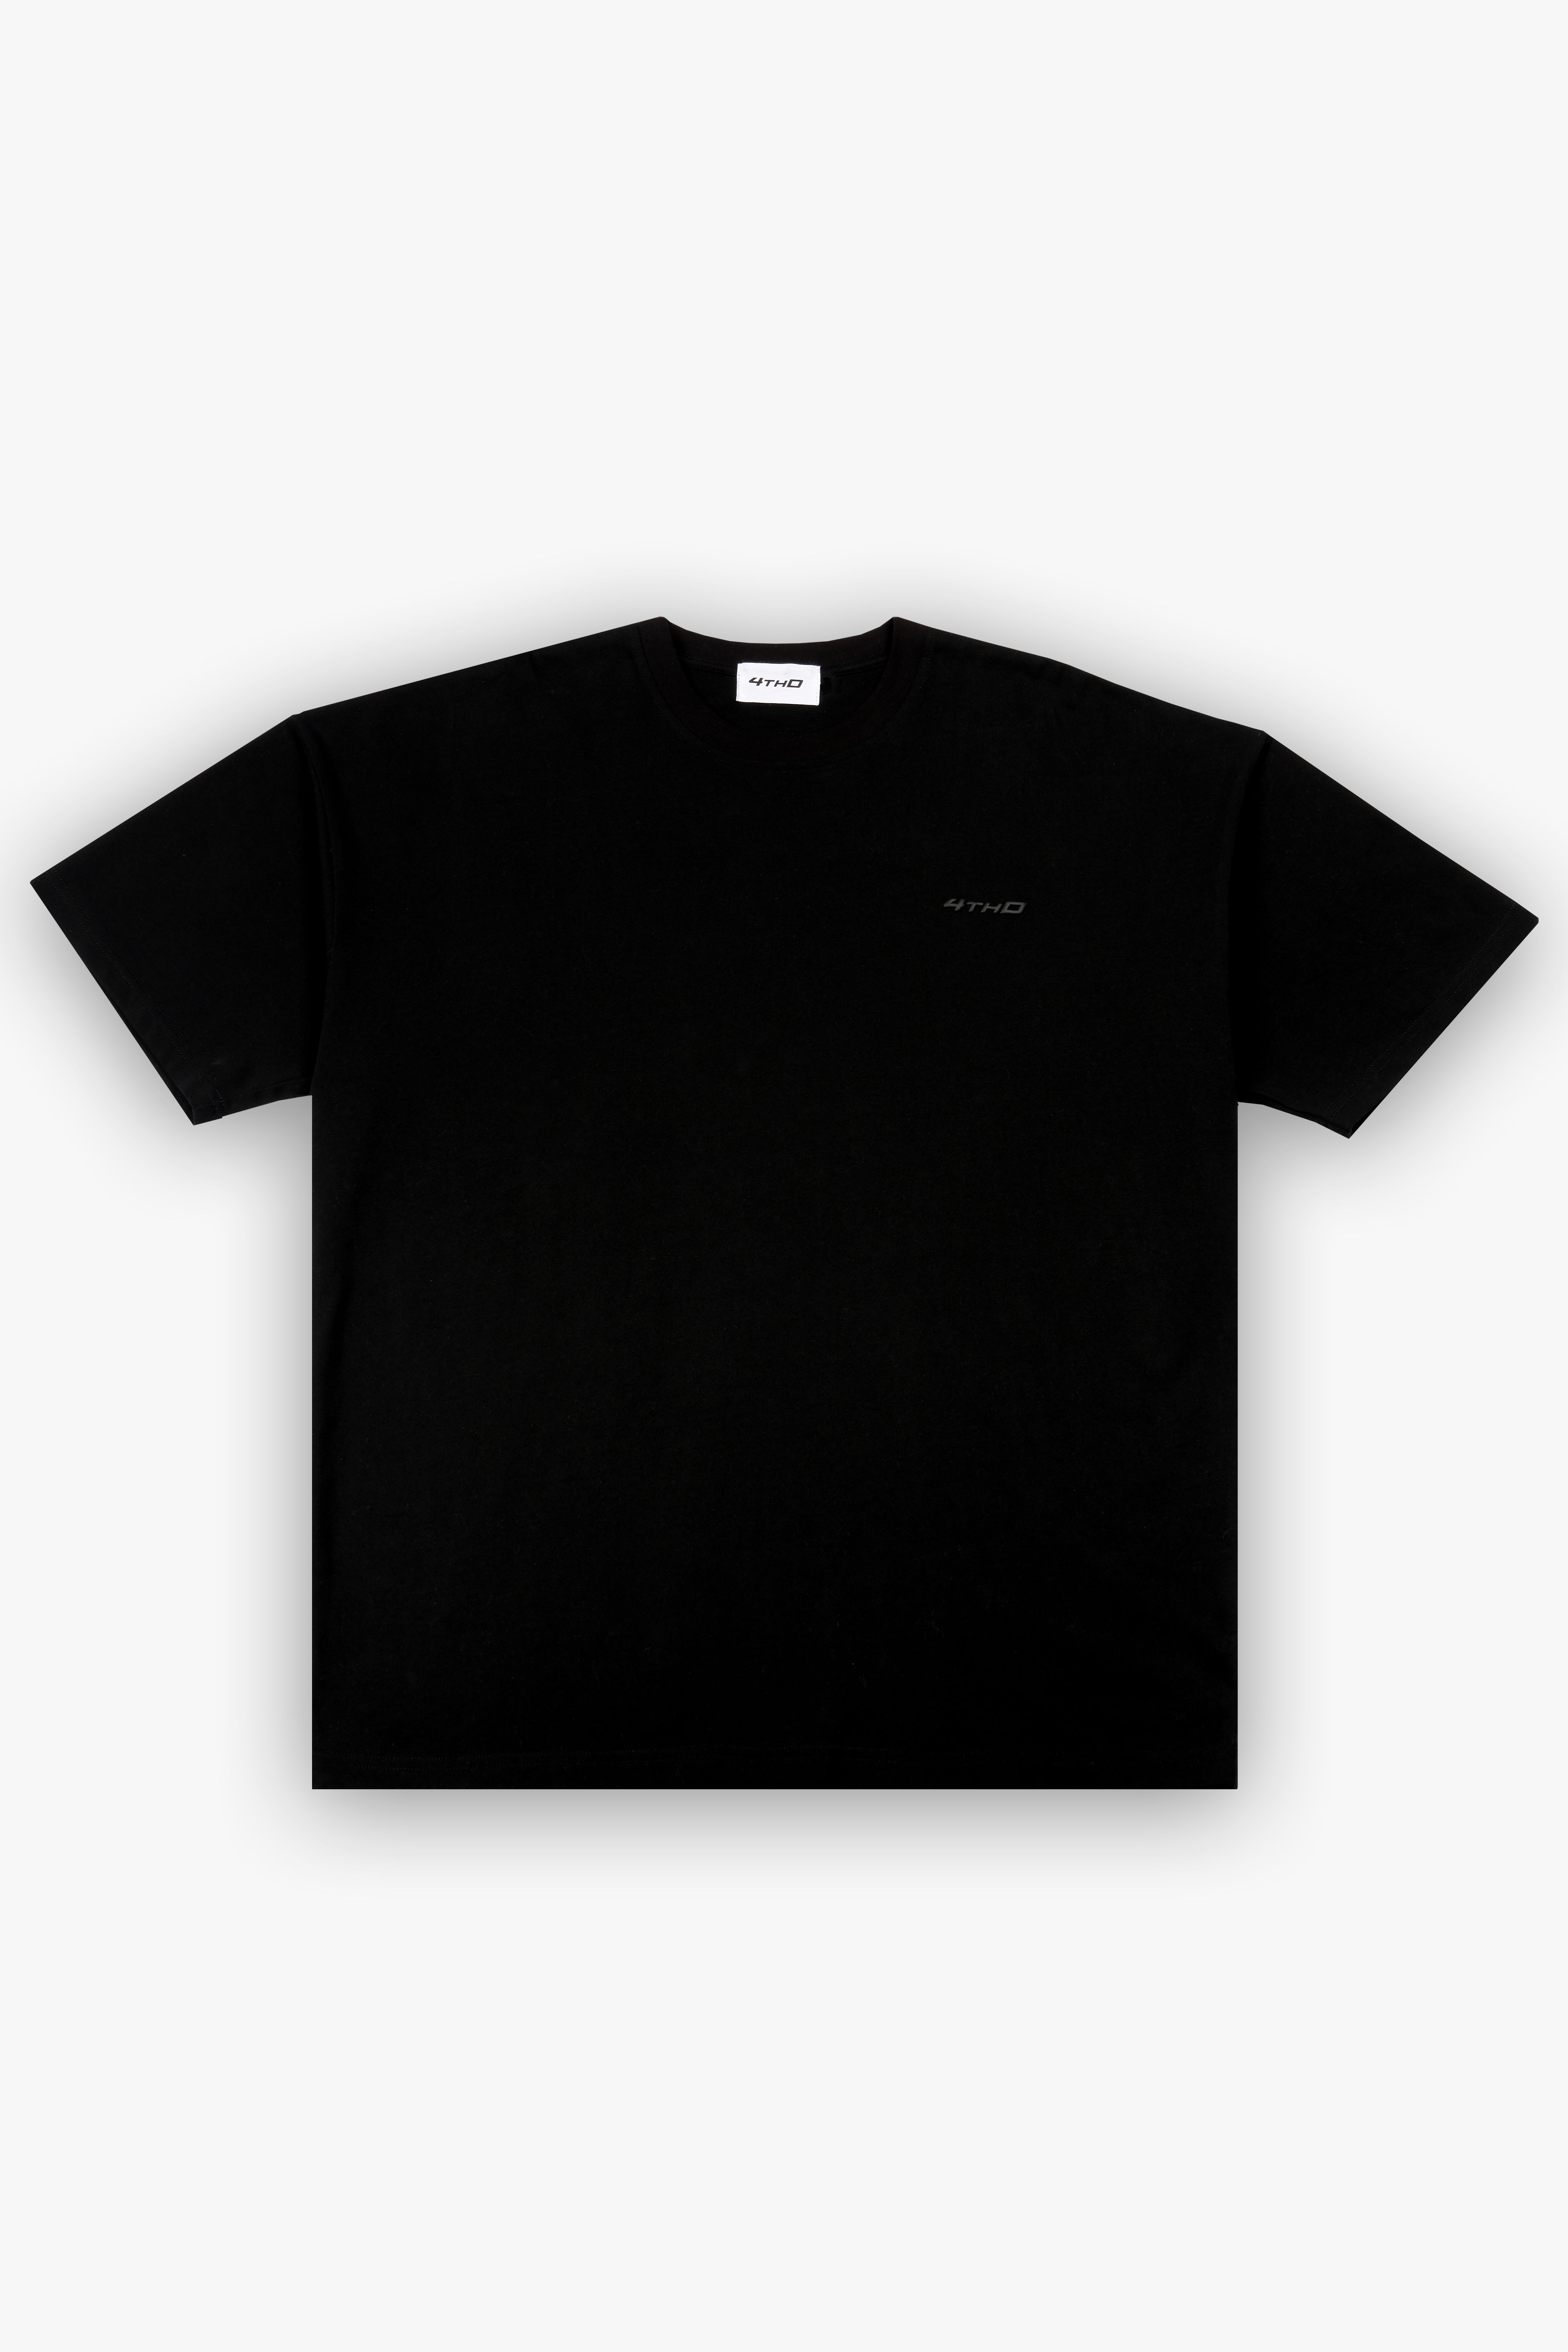 Pantone Shirt - Black